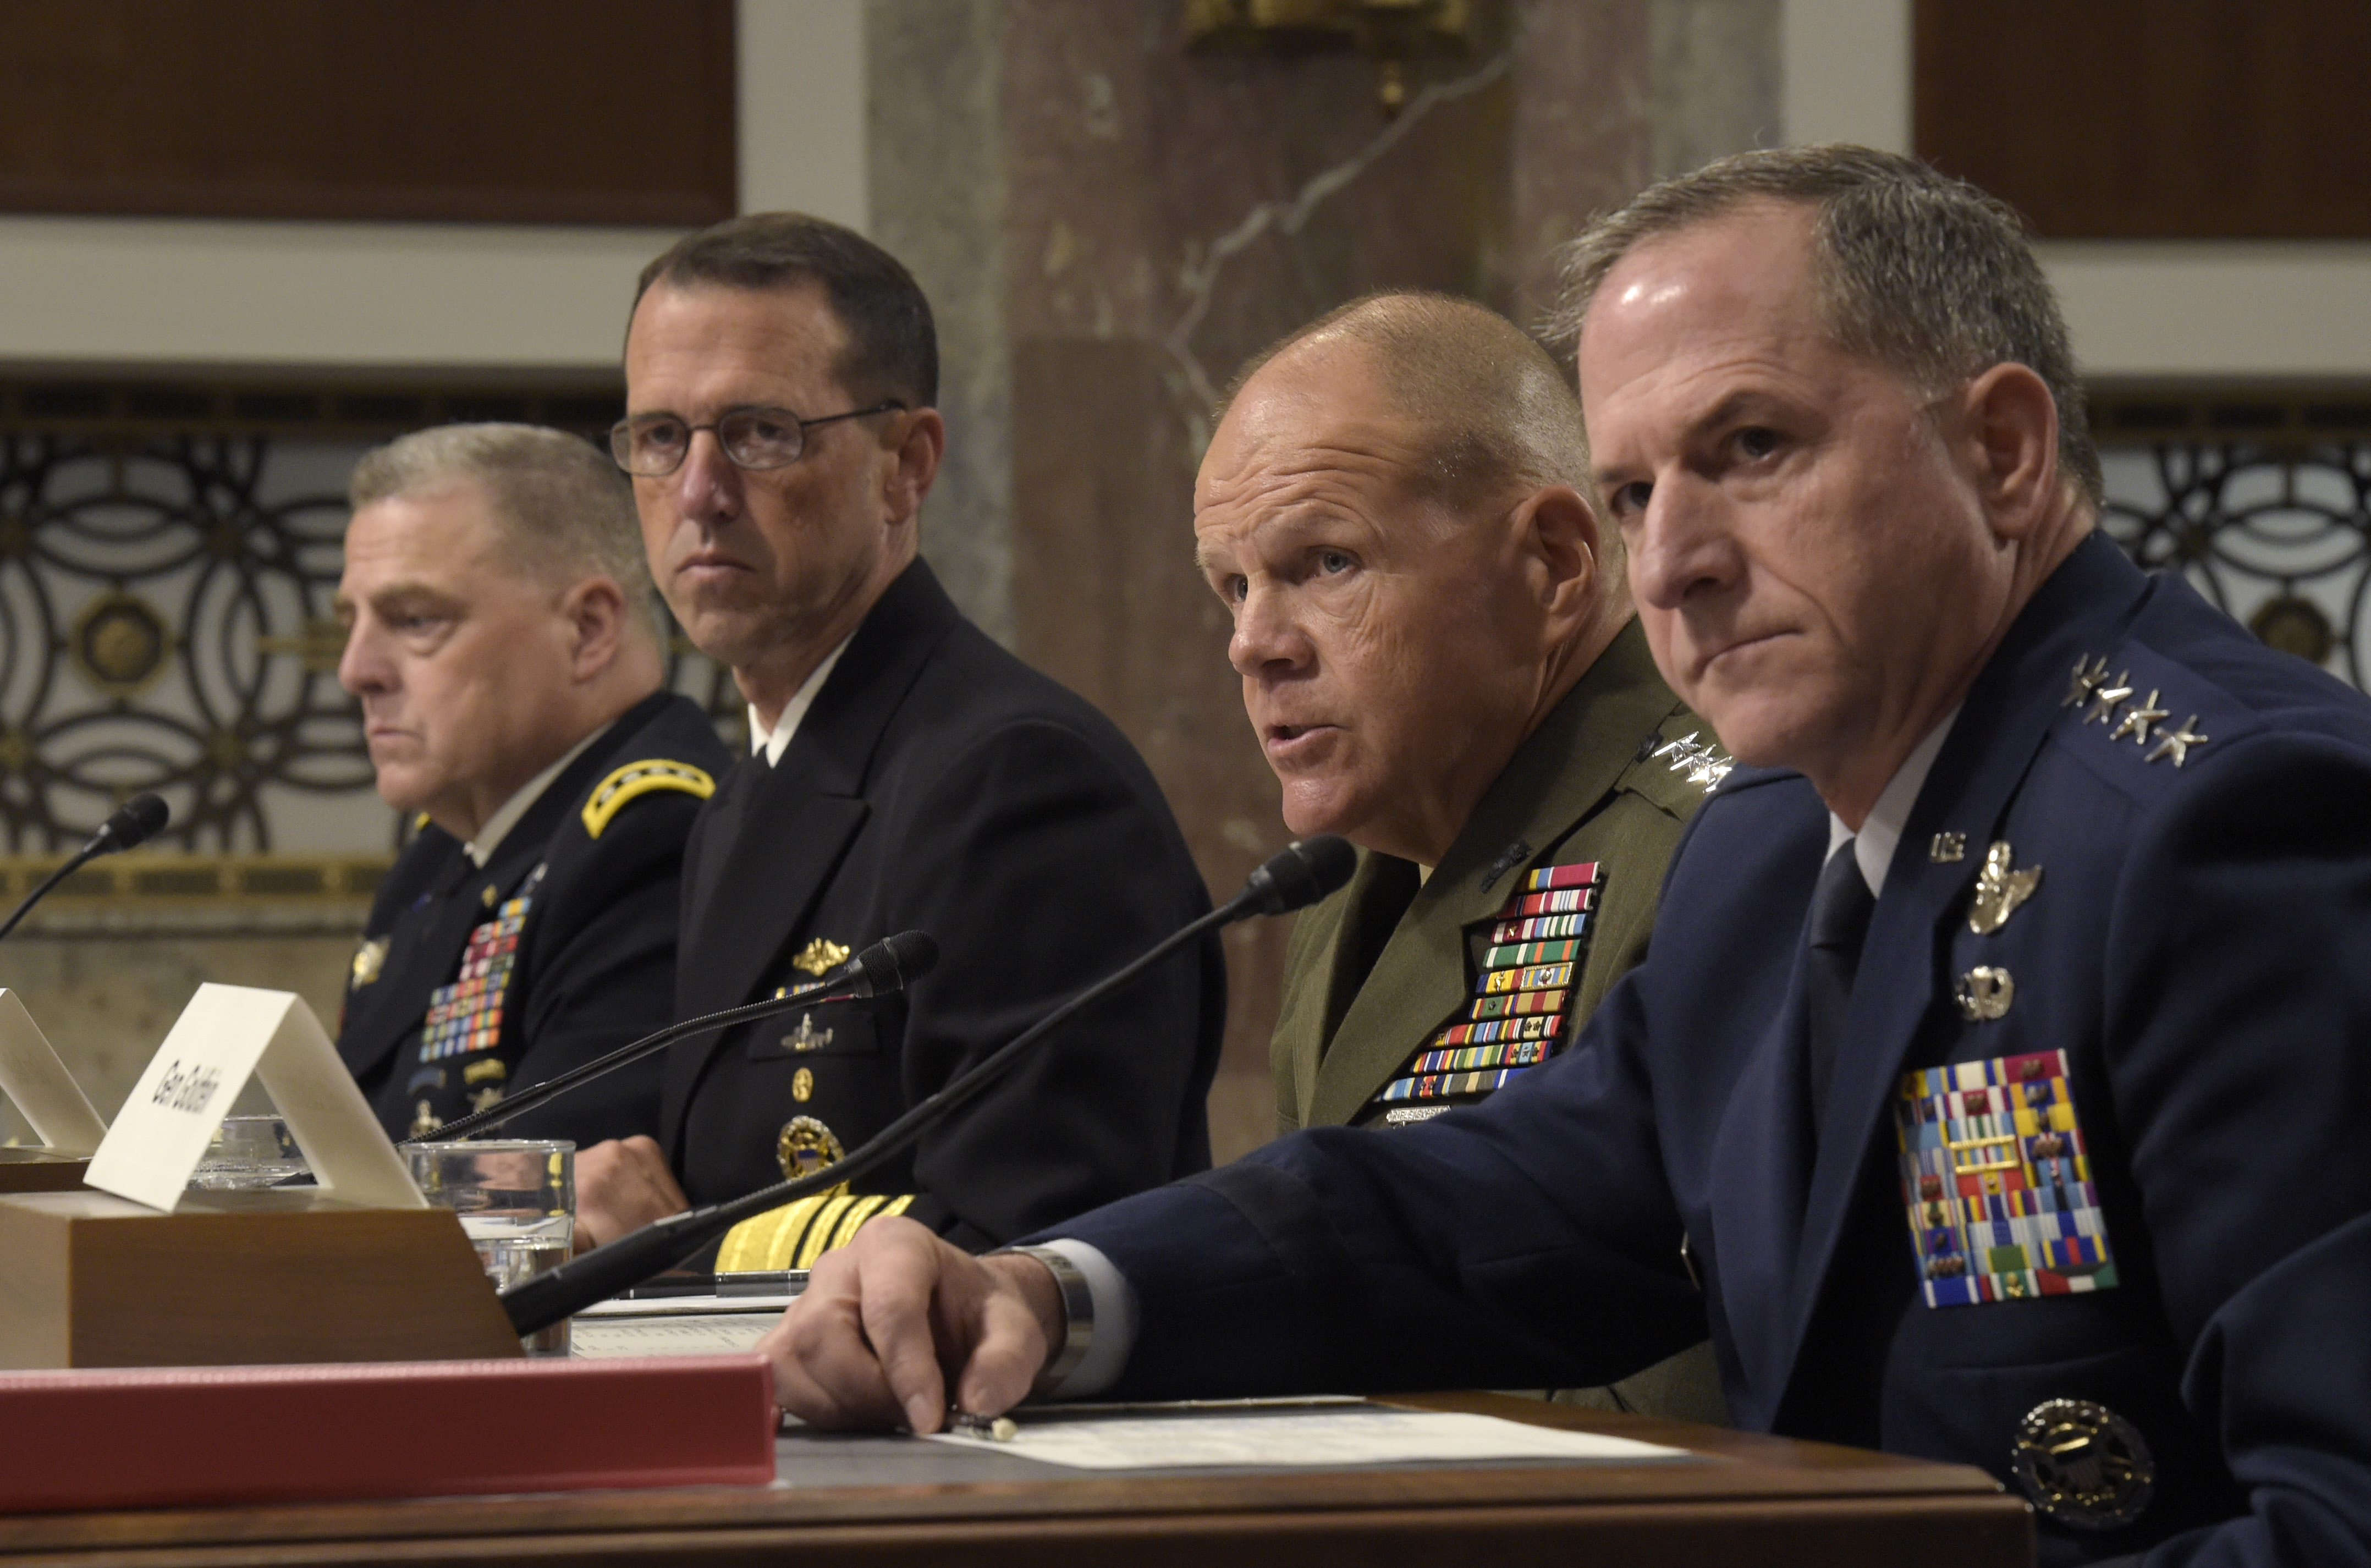 Top U.S. military chiefs denounce racism